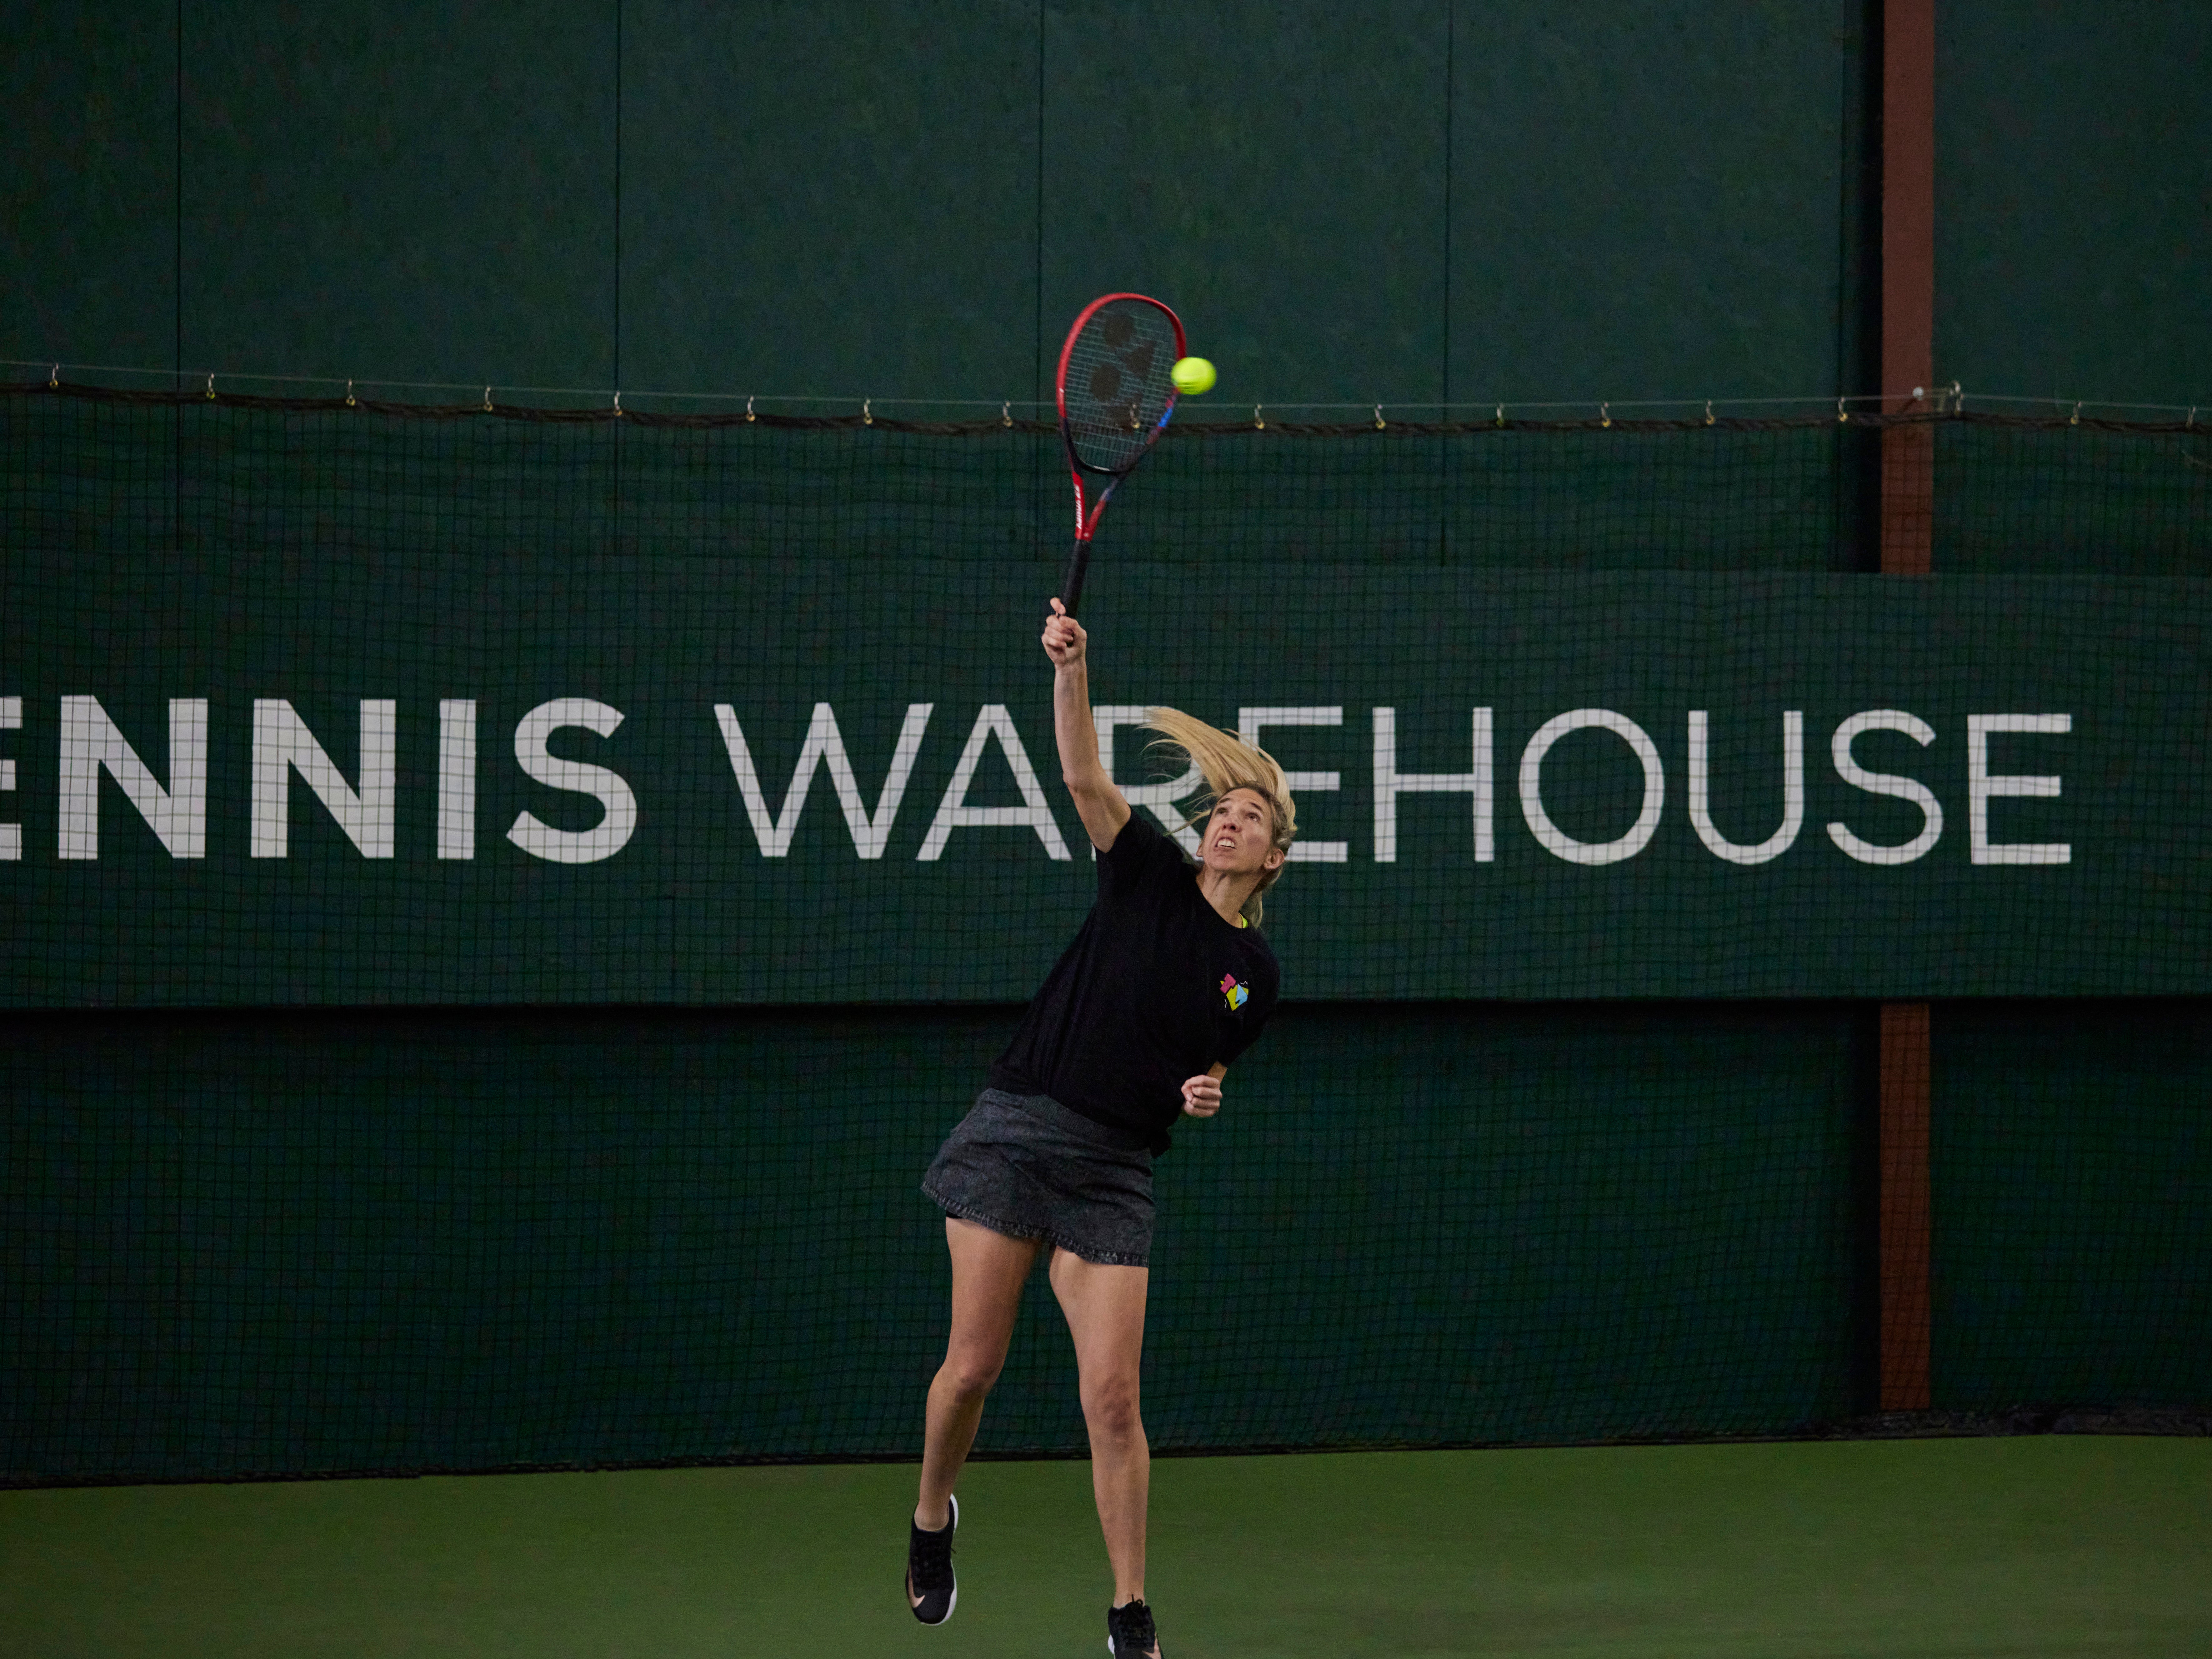 Calcetines Nike - Mujer - Tennis Warehouse Europe